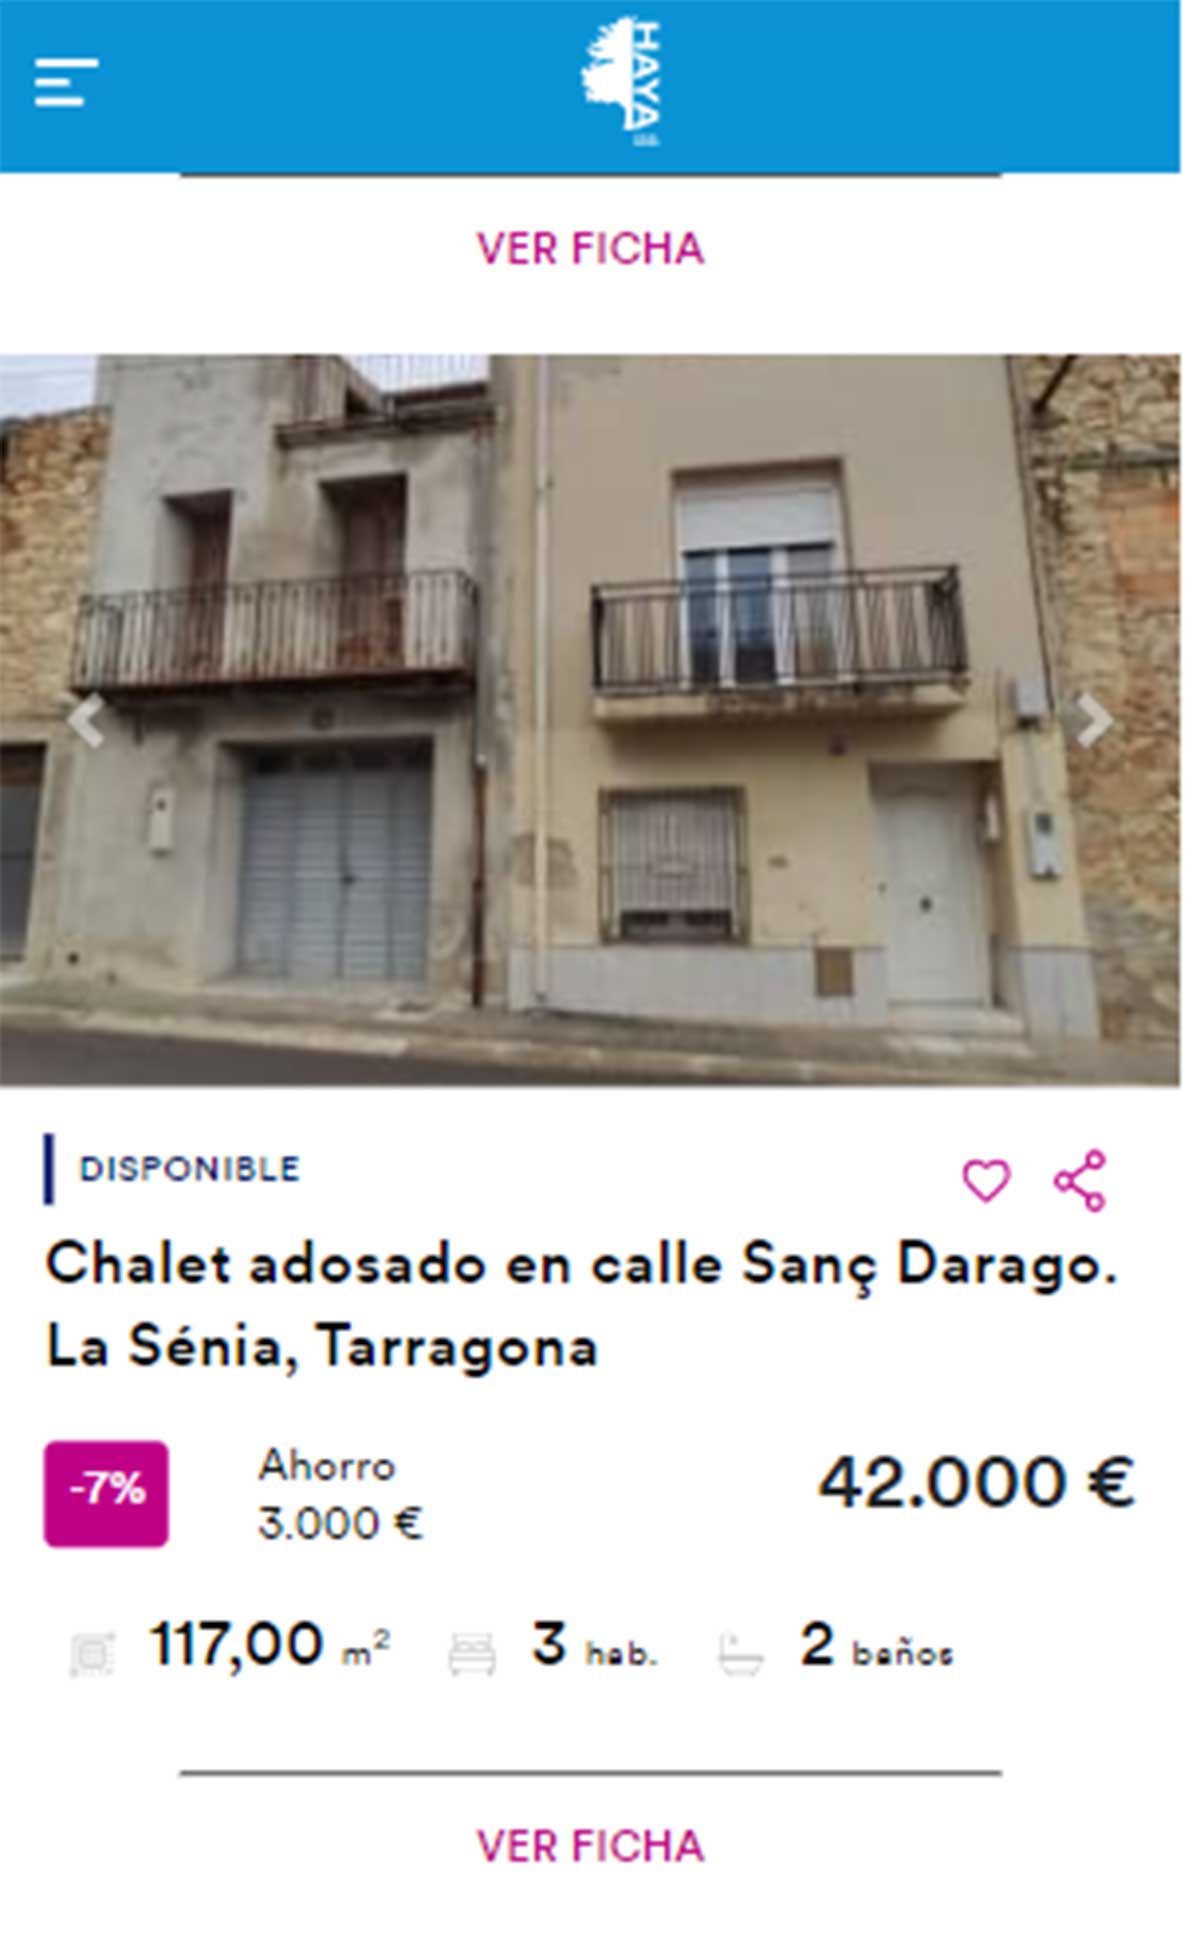 Chalet adosado por 42.000 euros